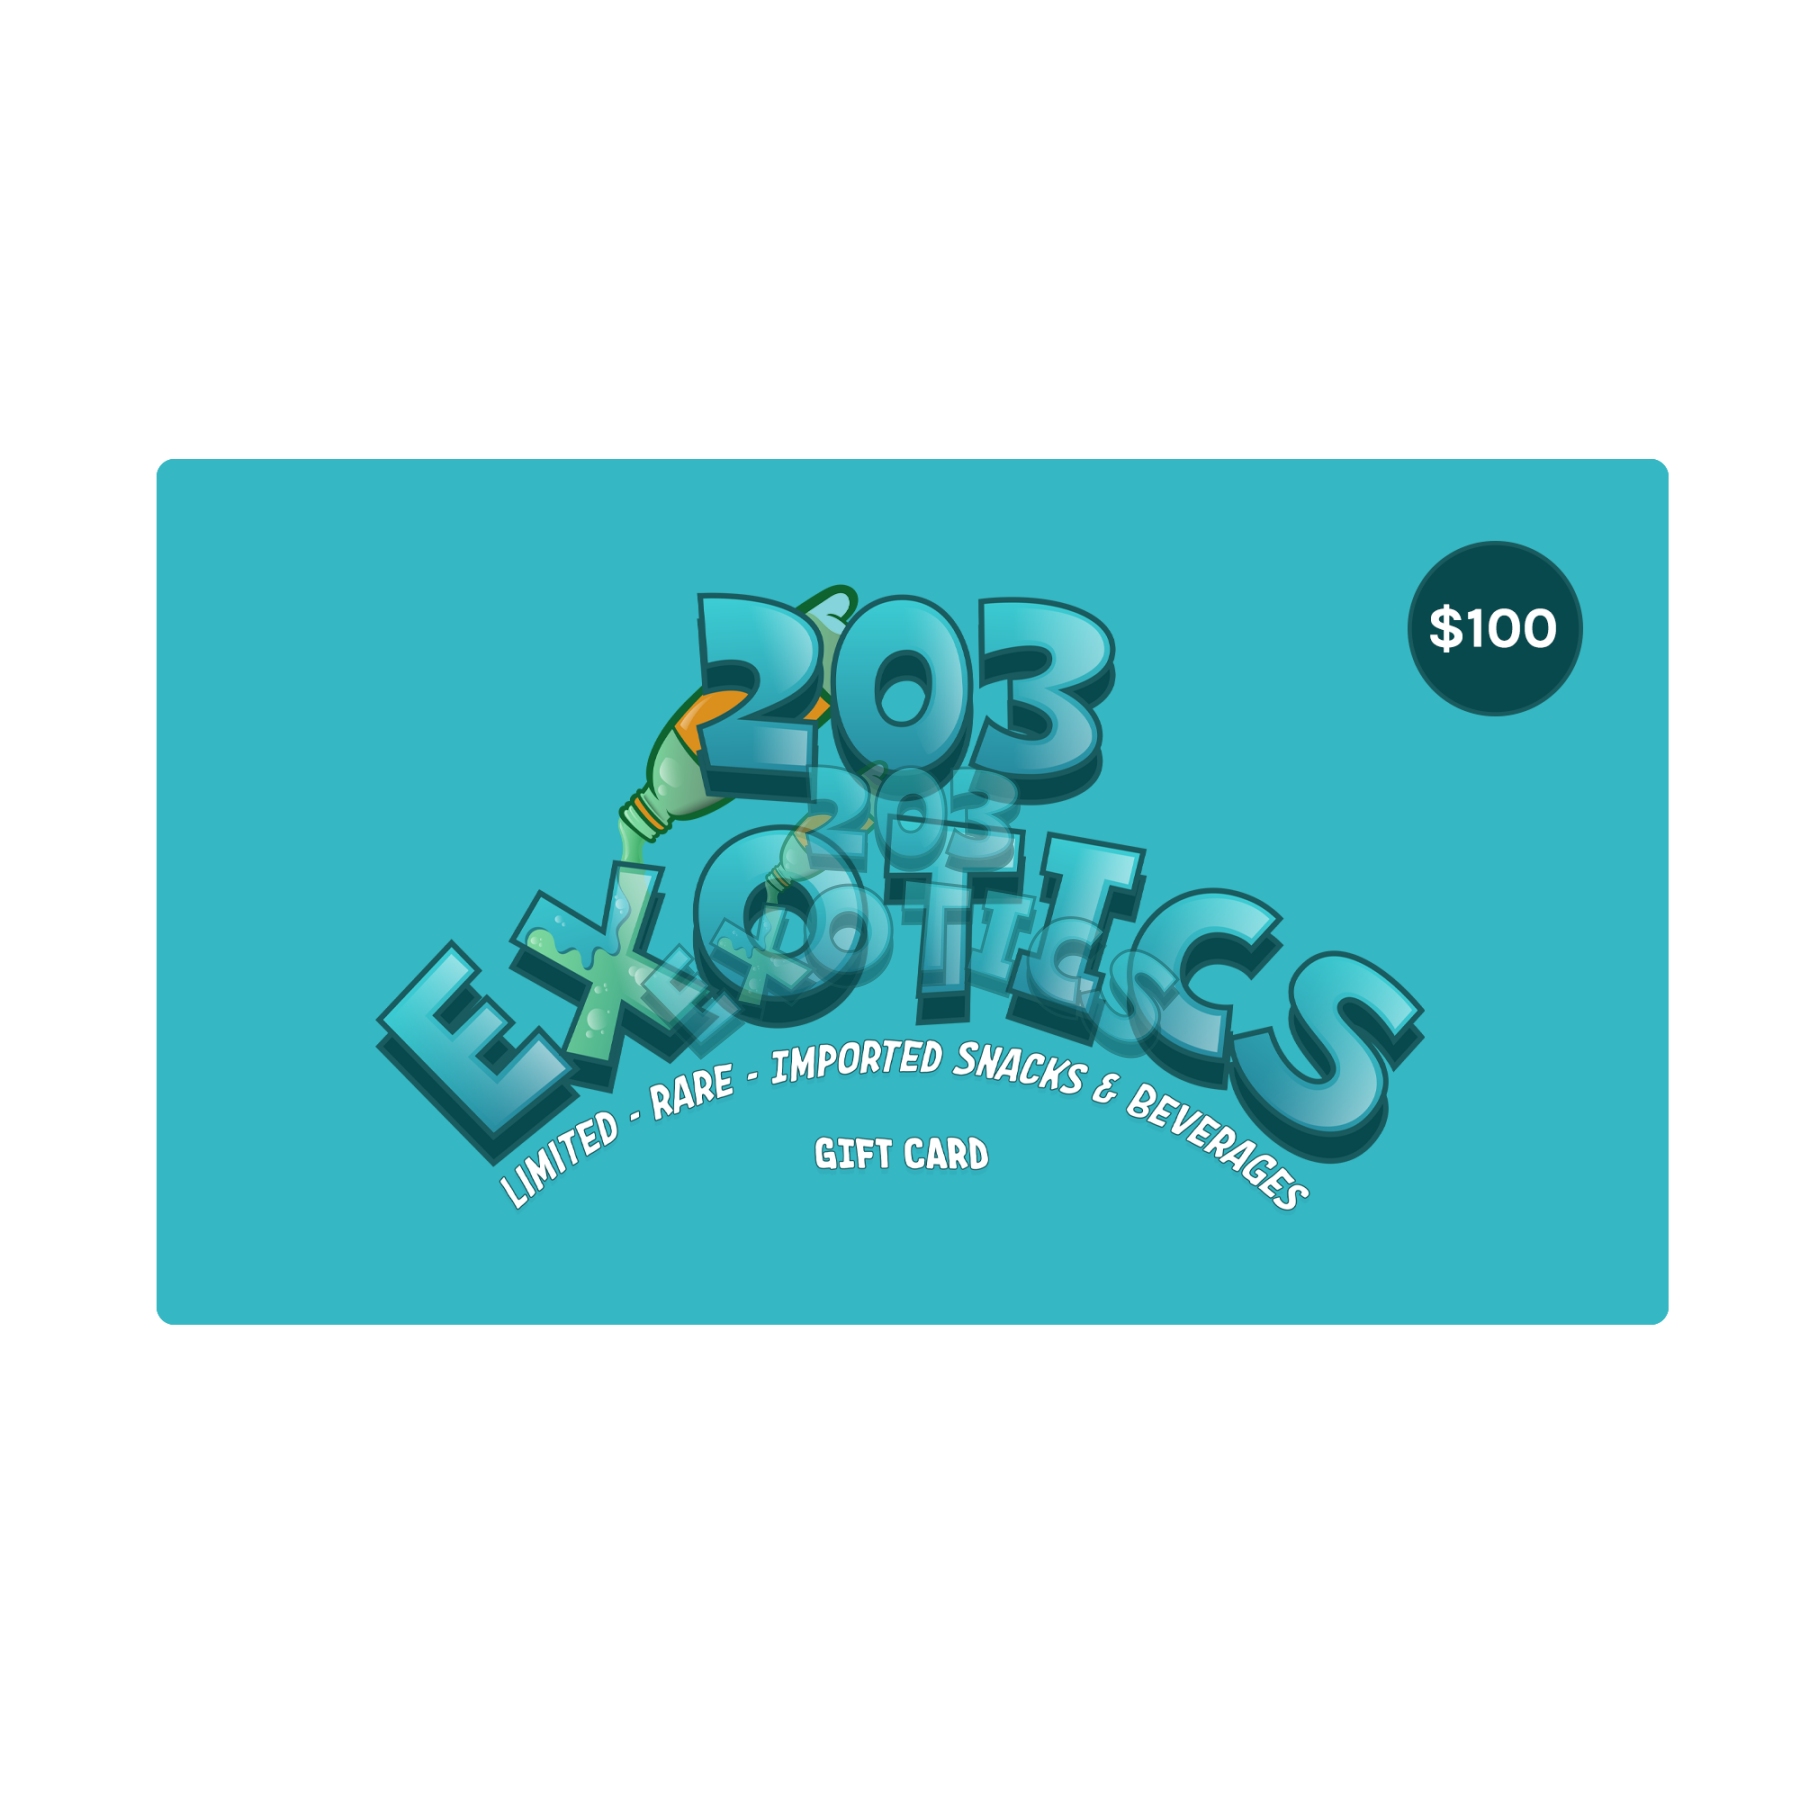 203 Exotics Gift Card $100.00